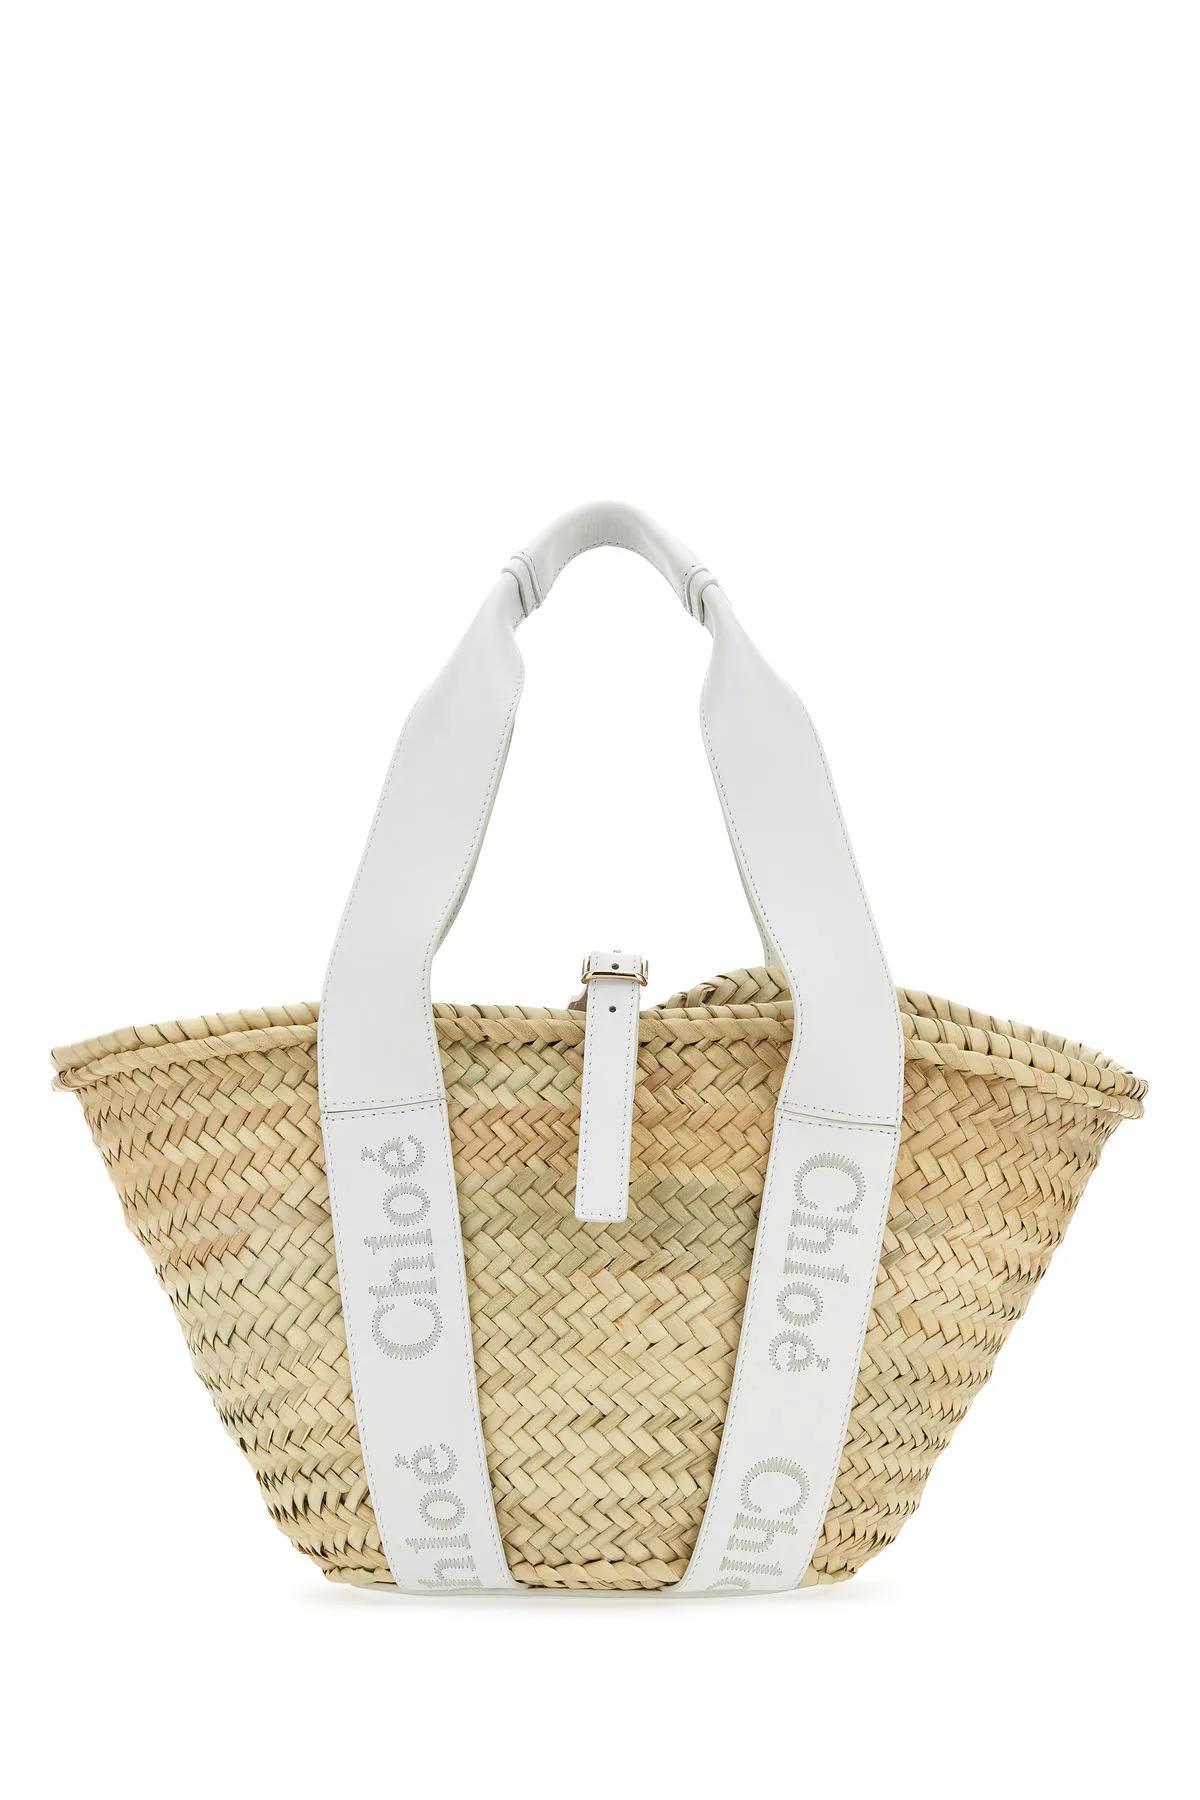 Chloé Raffia Sense Handbag in White | Lyst